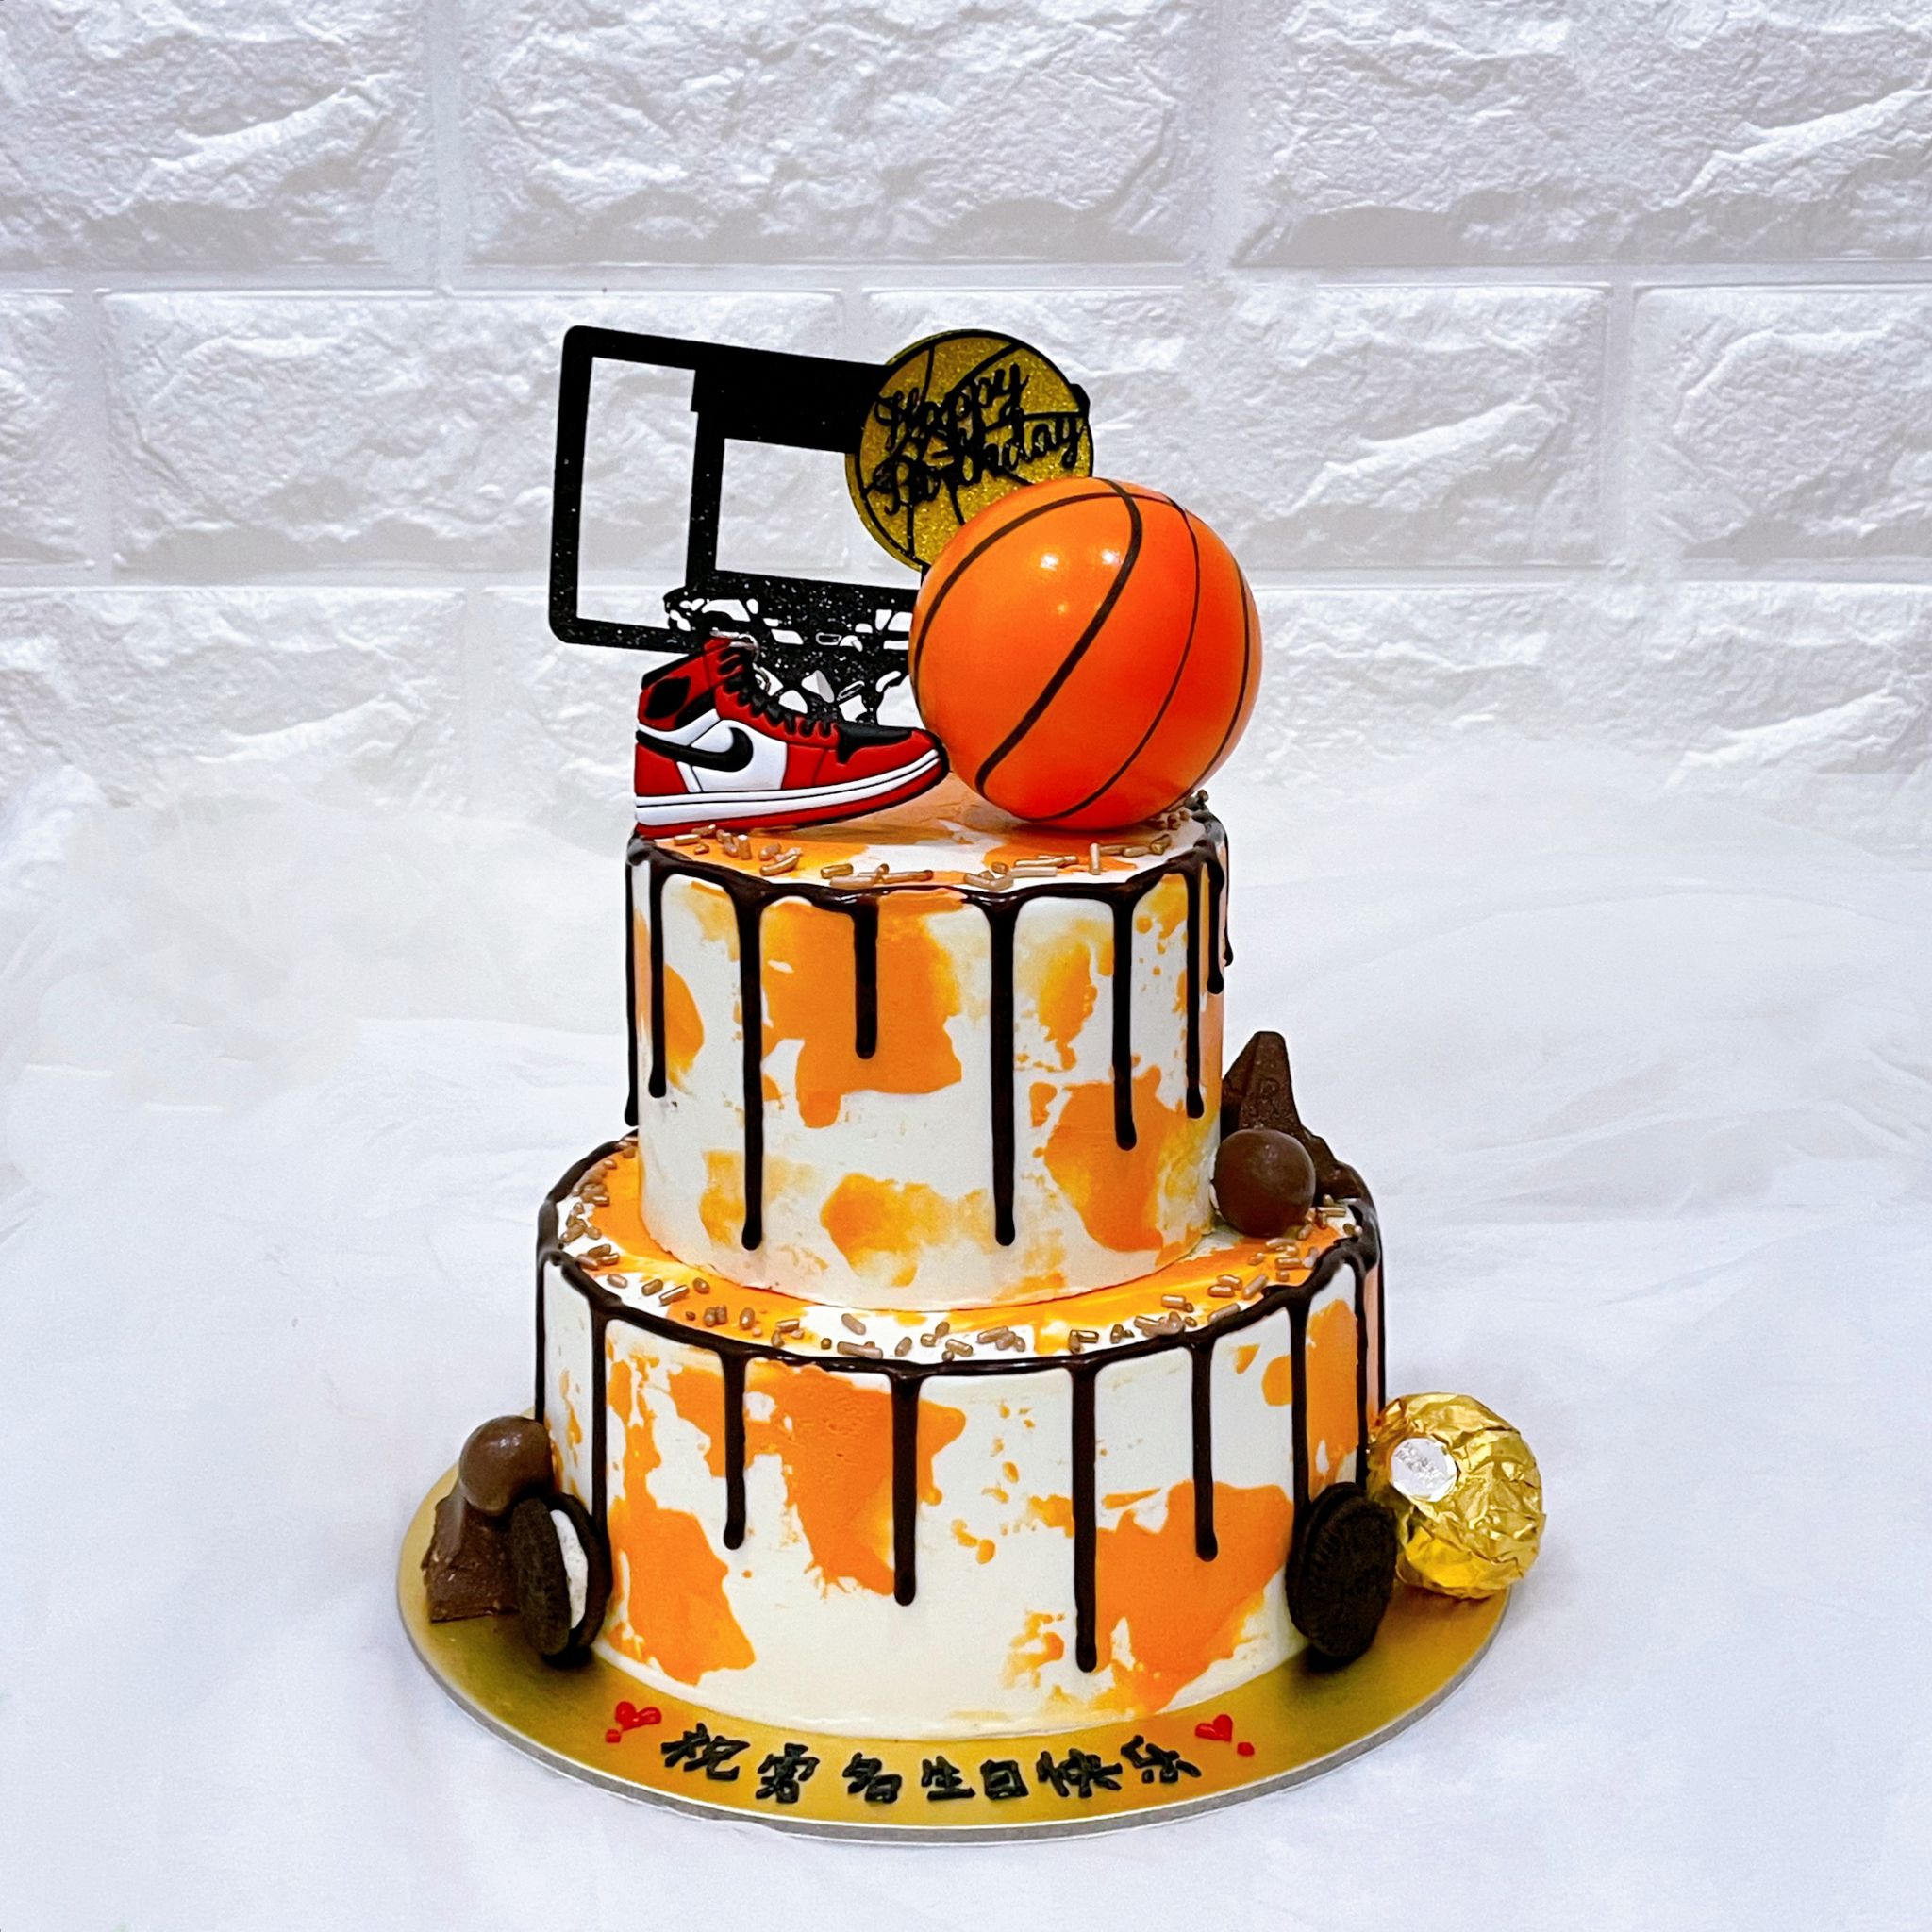 Basketball cake | Ice cream cake, Cream cake, Basketball cake